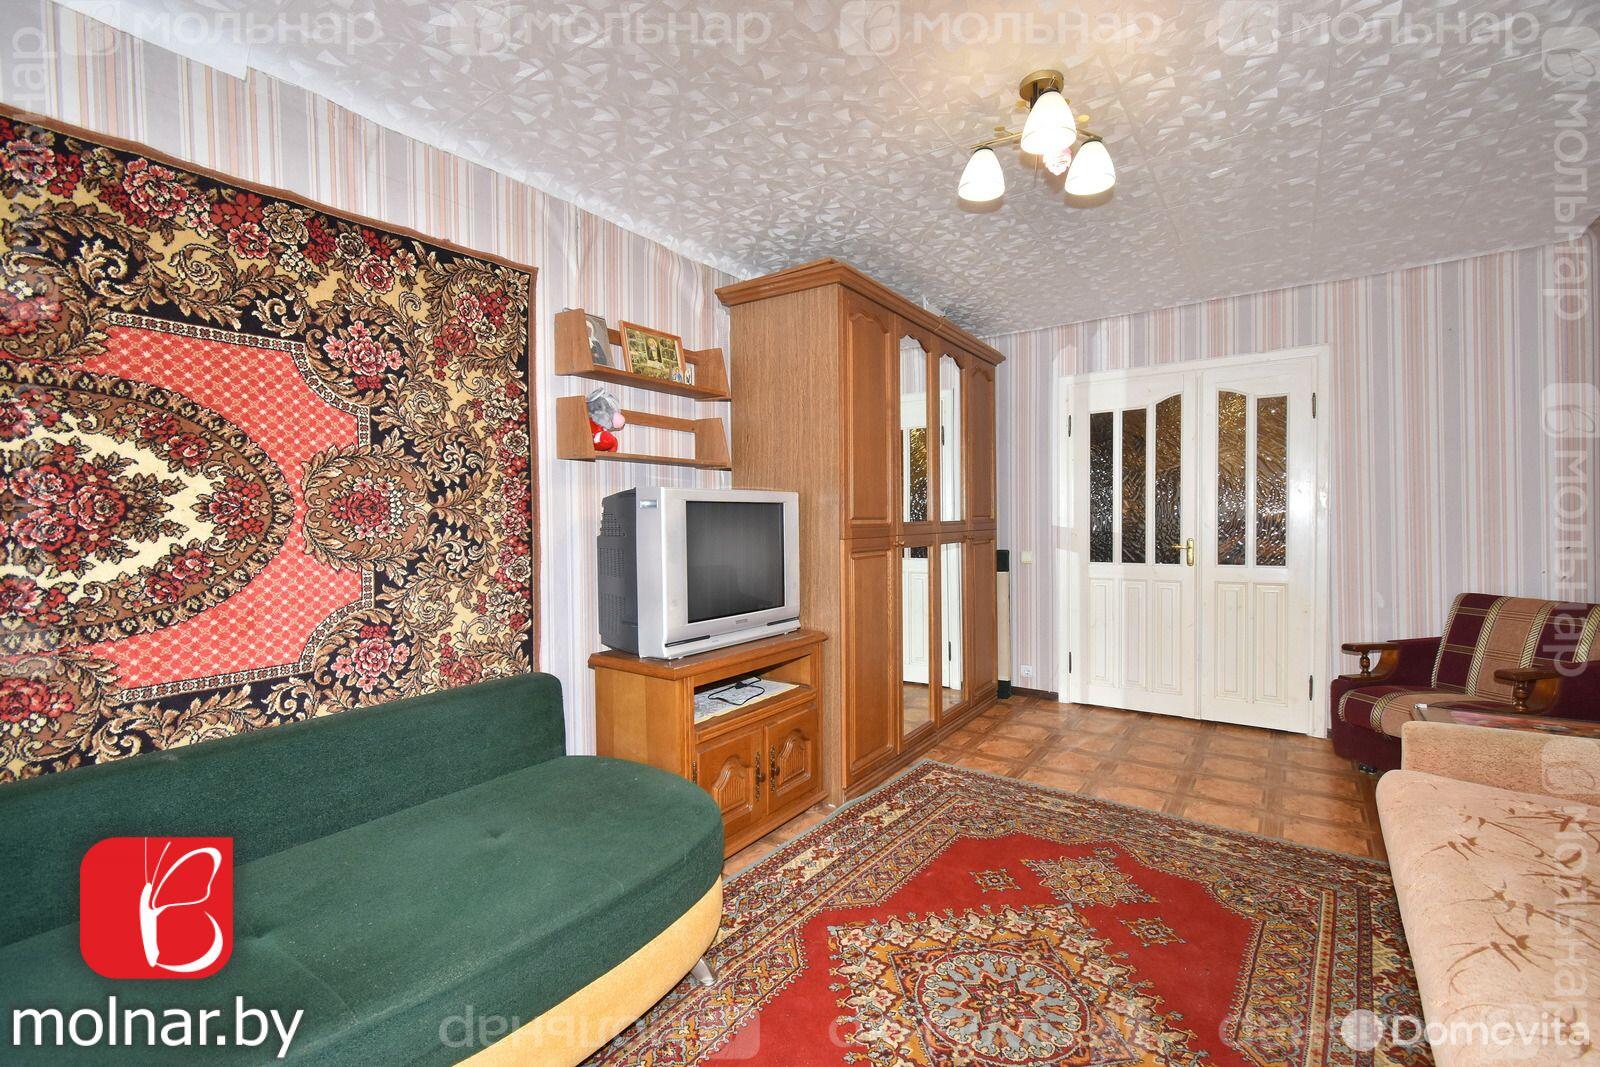 квартира, Минск, ул. Одинцова, д. 53, стоимость продажи 235 951 р.